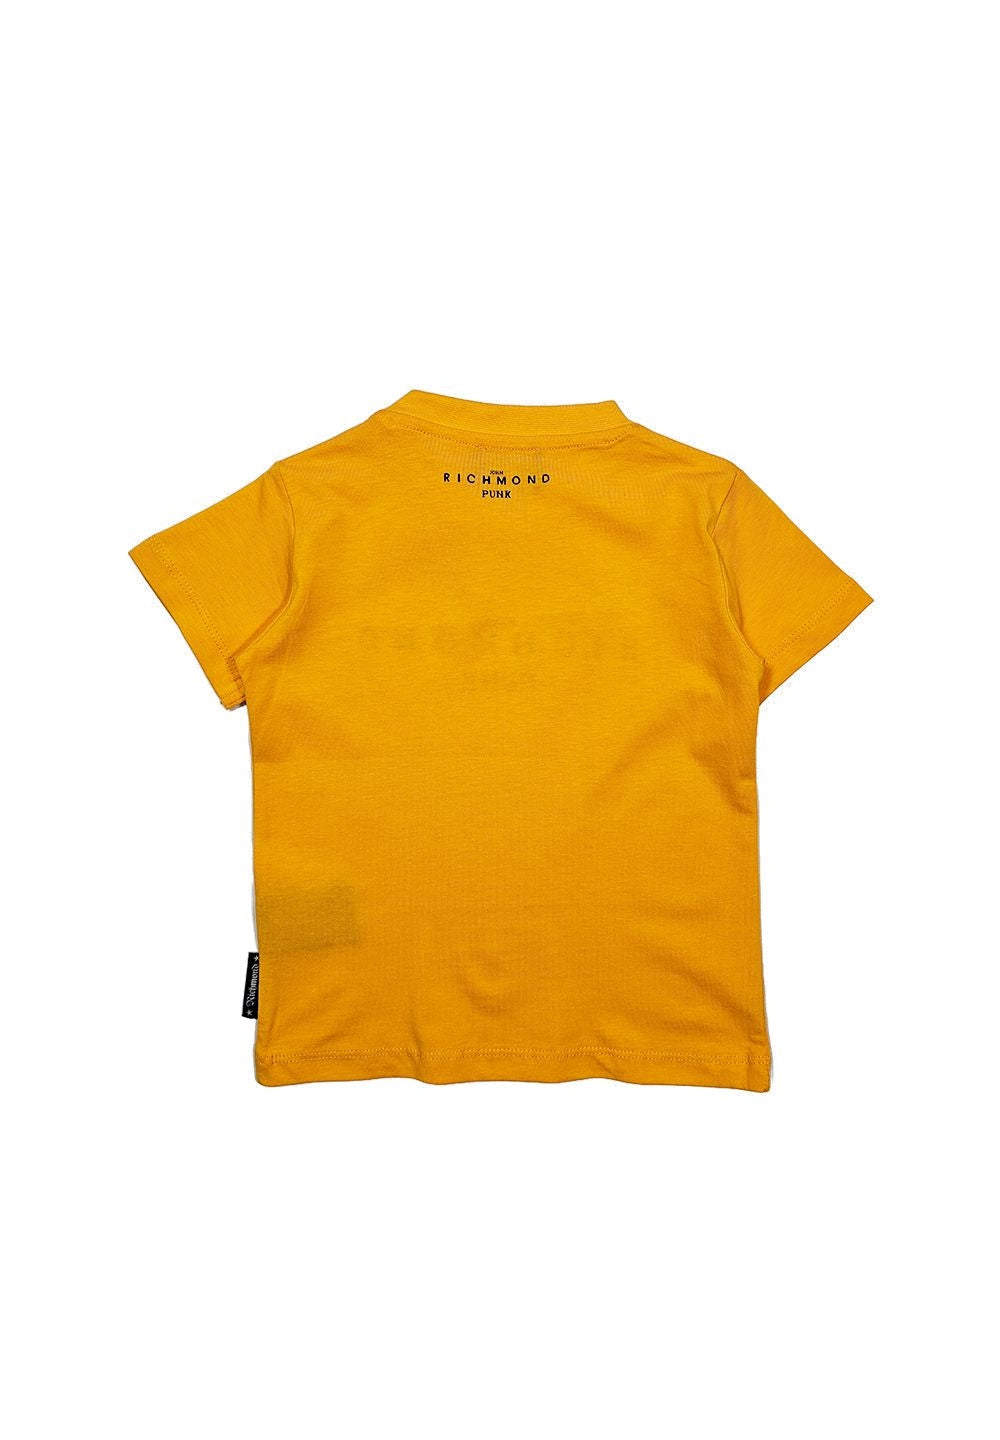 T-shirt senape per neonato